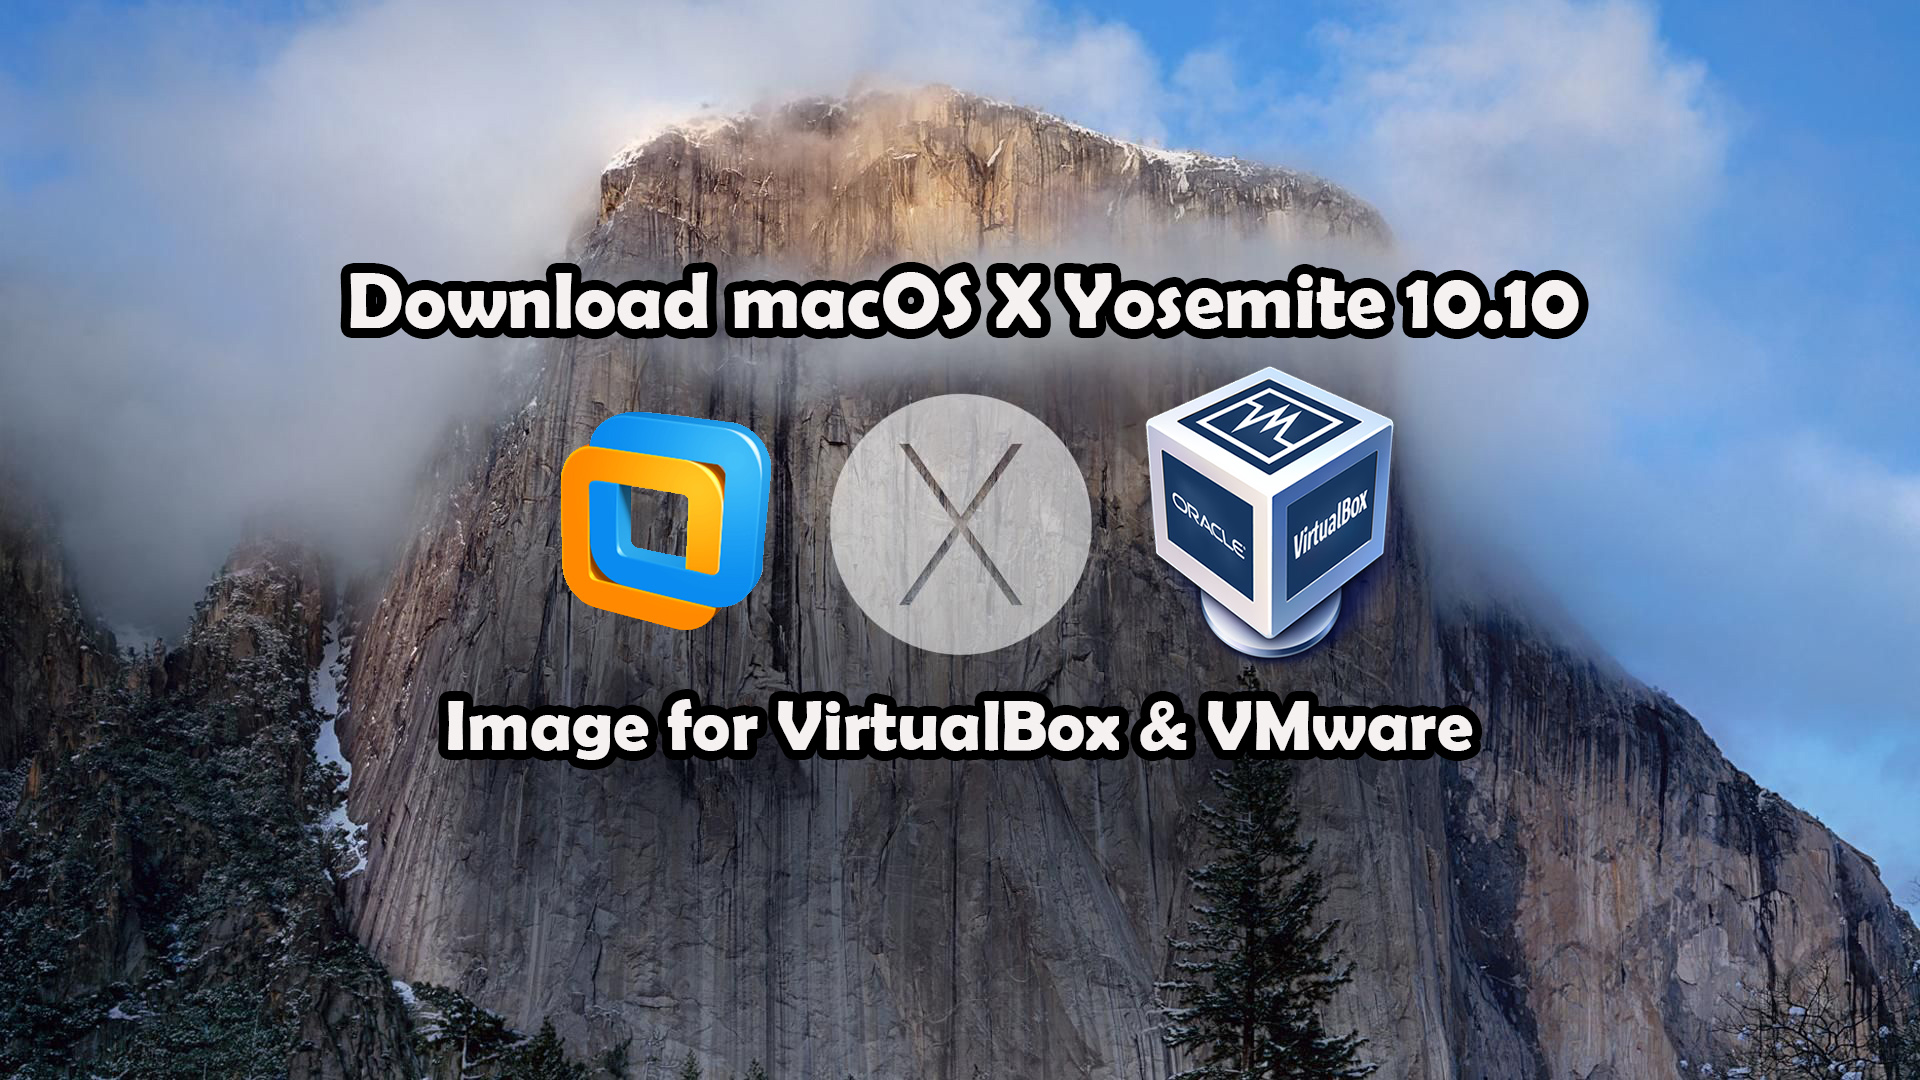 vmware for mac yosemite free download